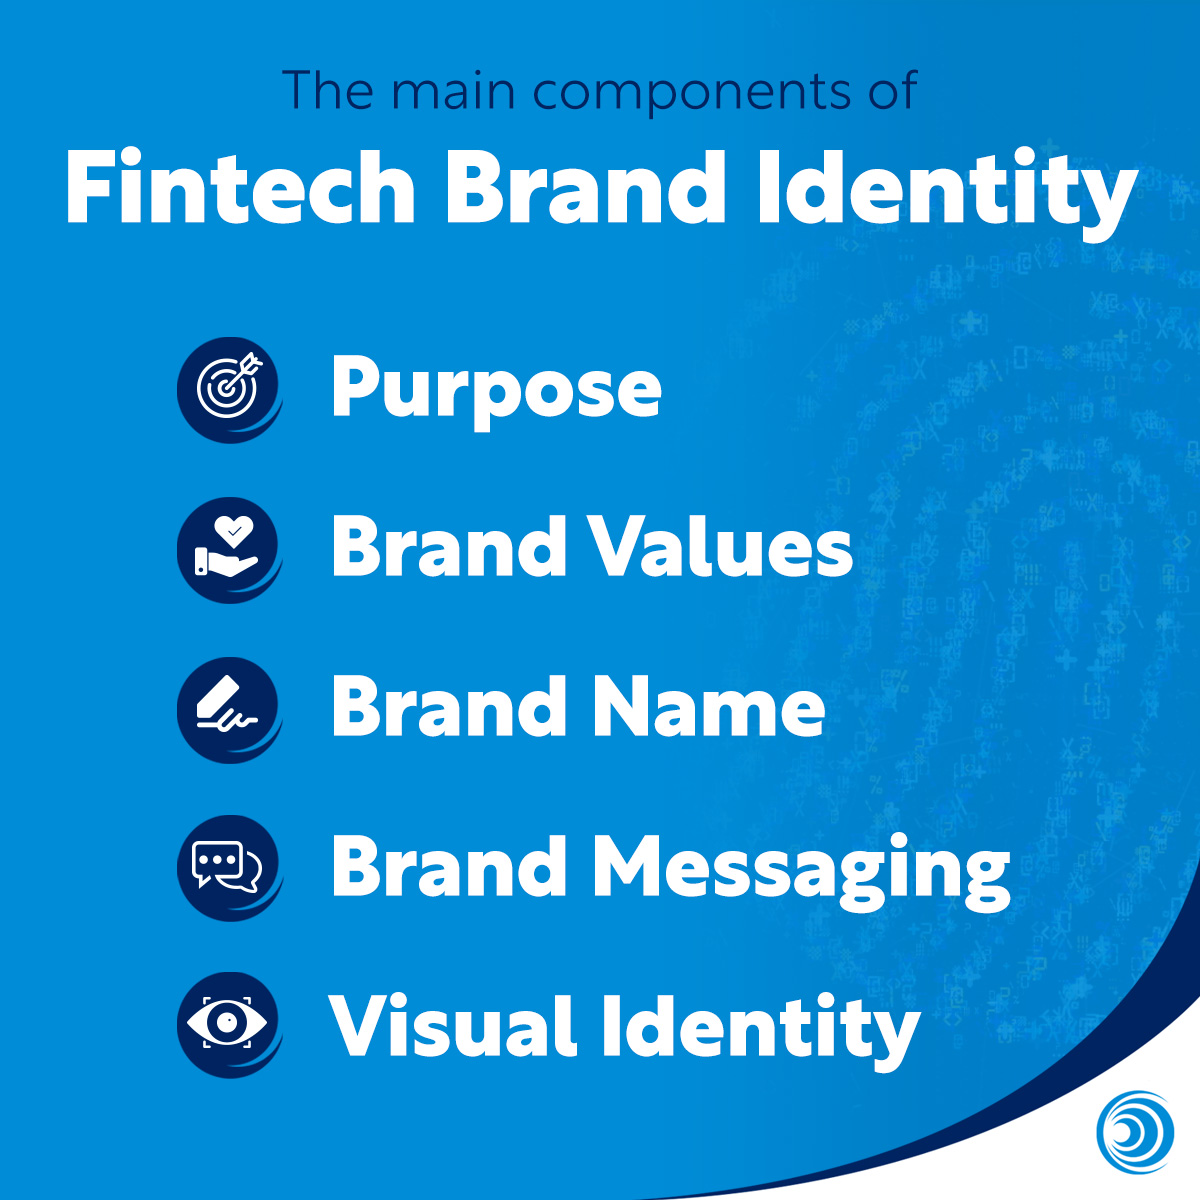 Fintech Brand Identity 1 Blog Template Infographic